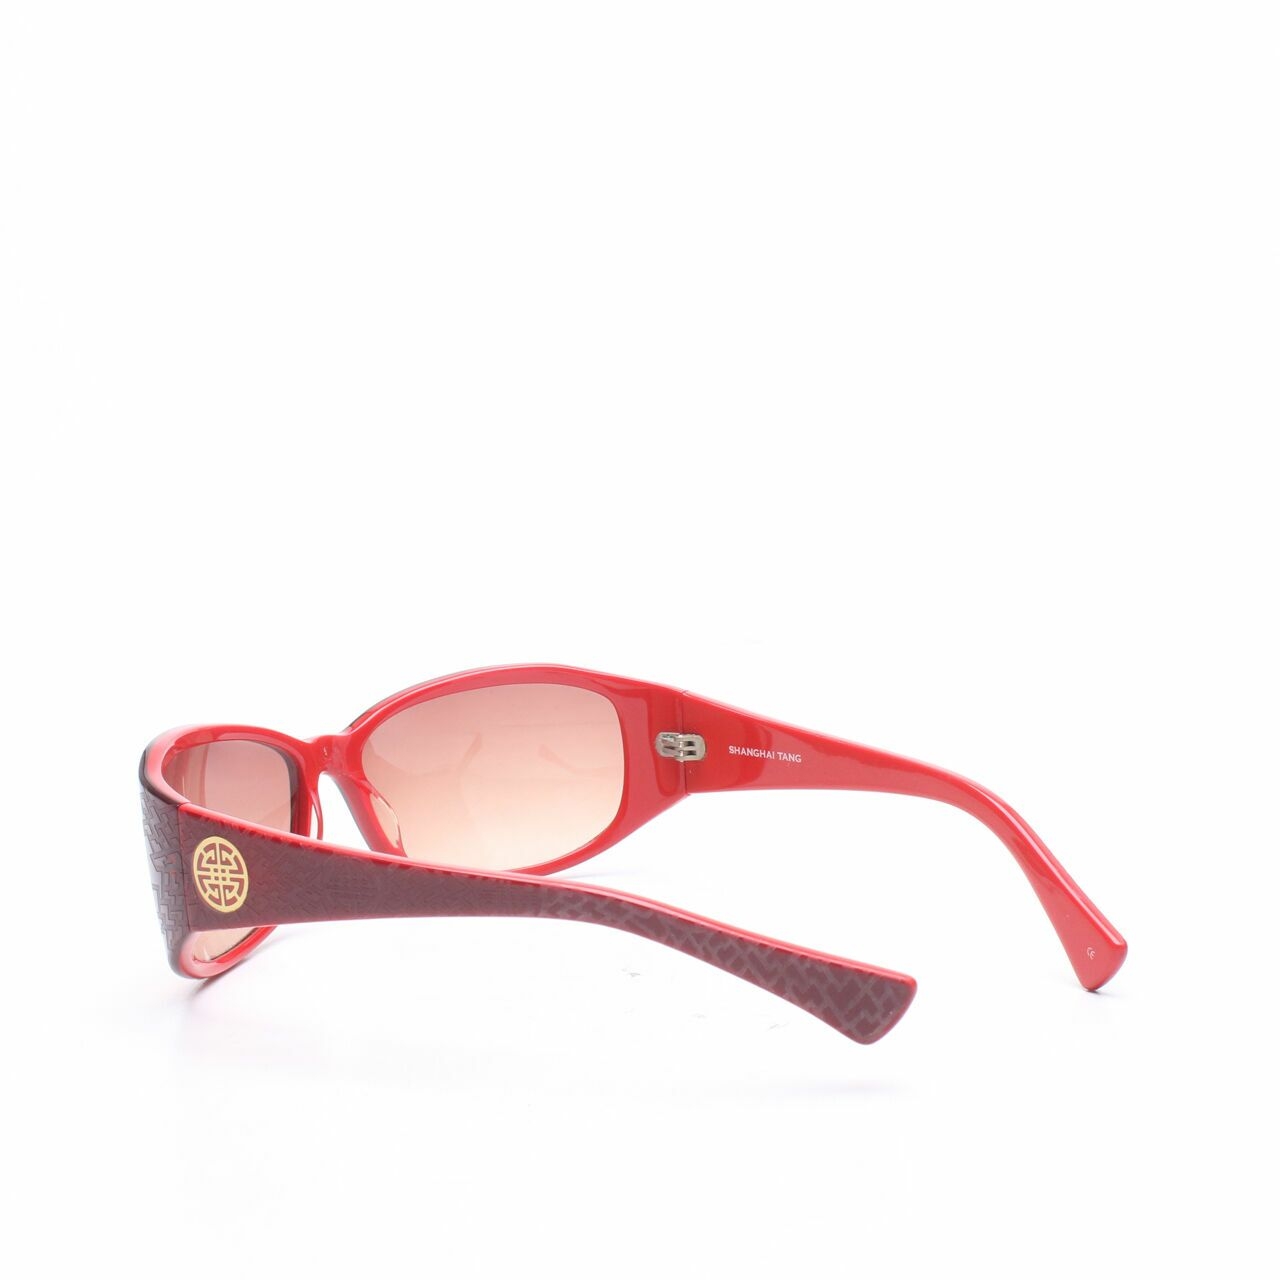 Shanghai Tang Red Sunglasses